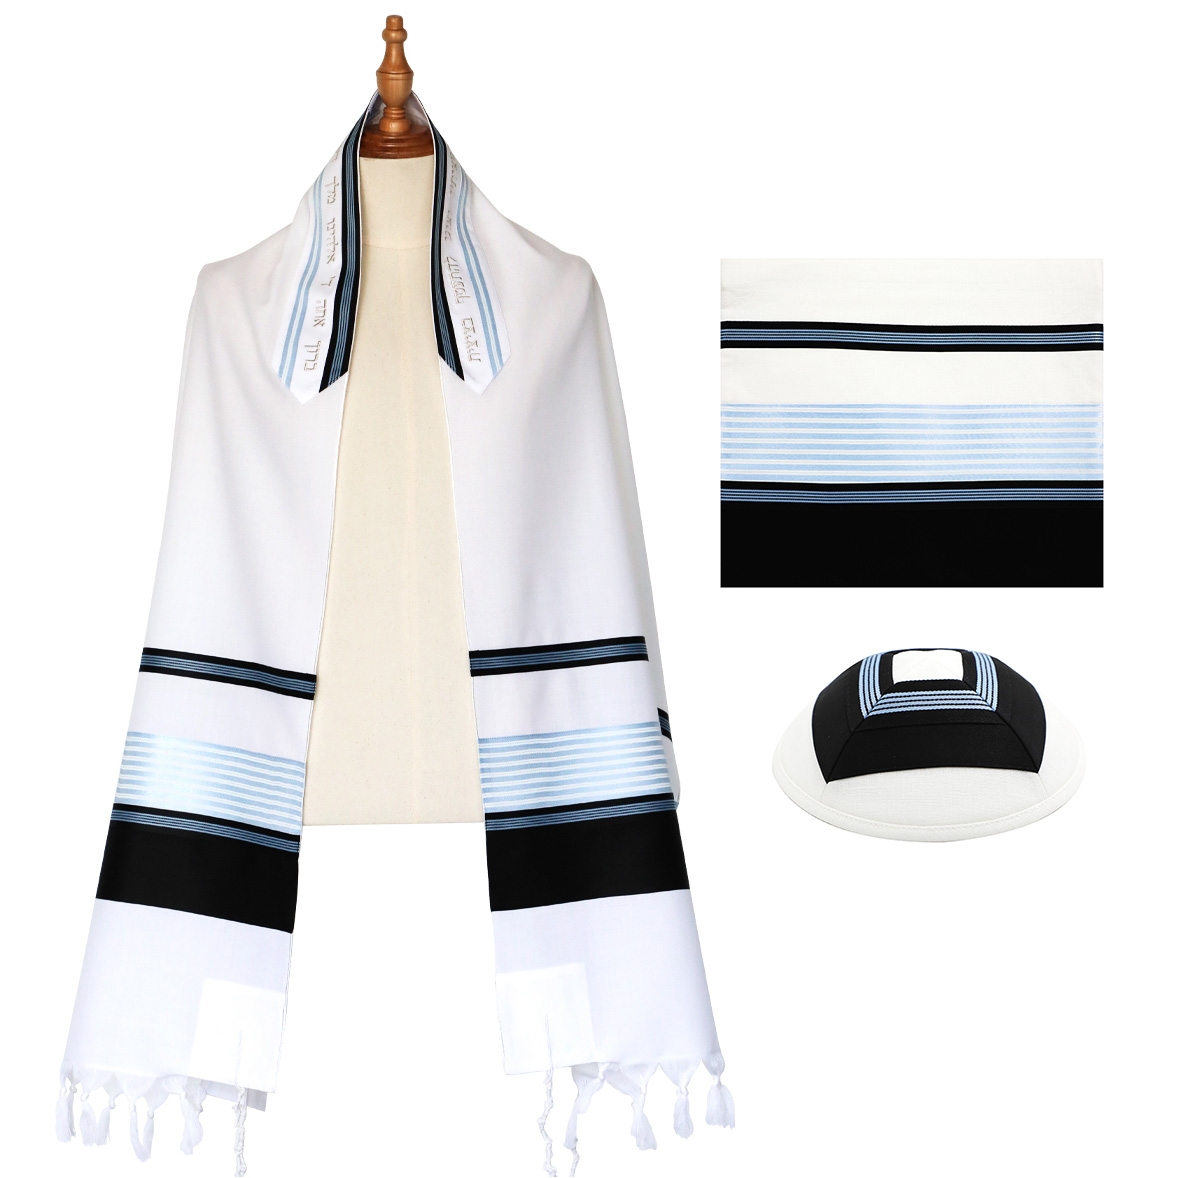 Eretz Judaica "Ashdod" Wool Prayer Shawl Set for Men with Black and Blue Stripes - 1